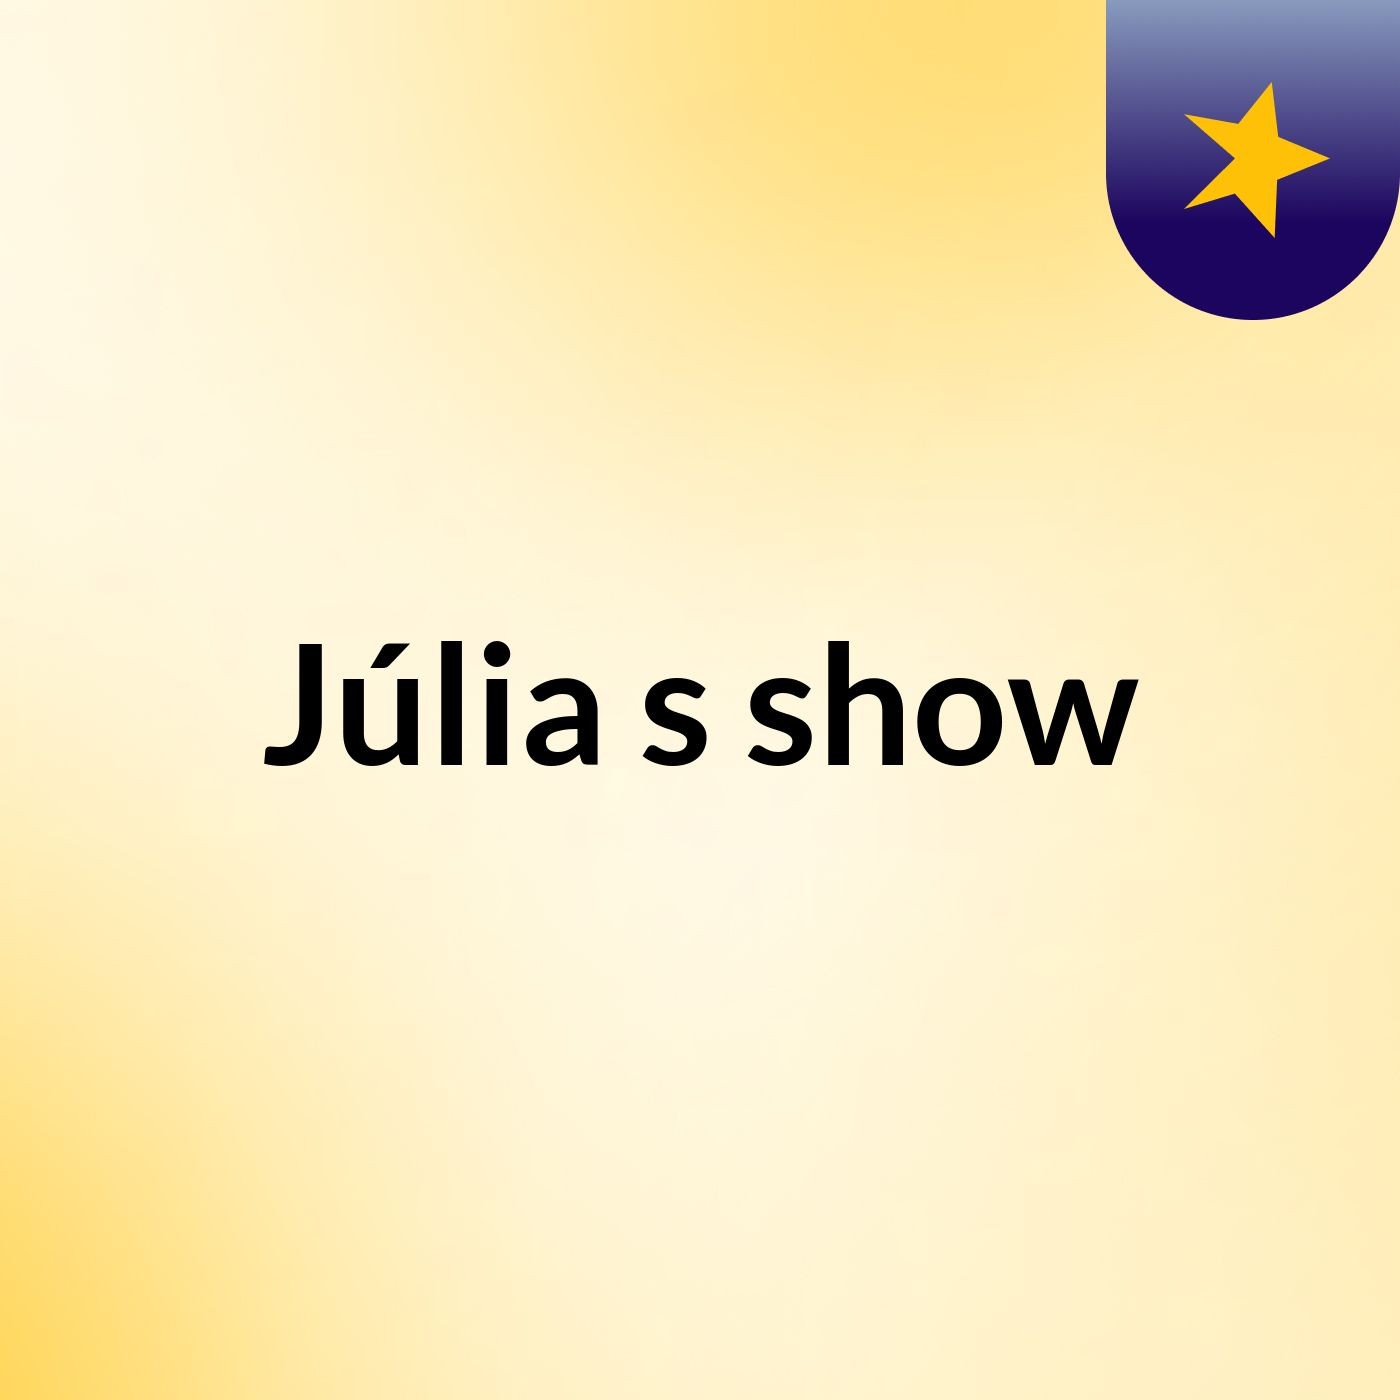 Júlia's show